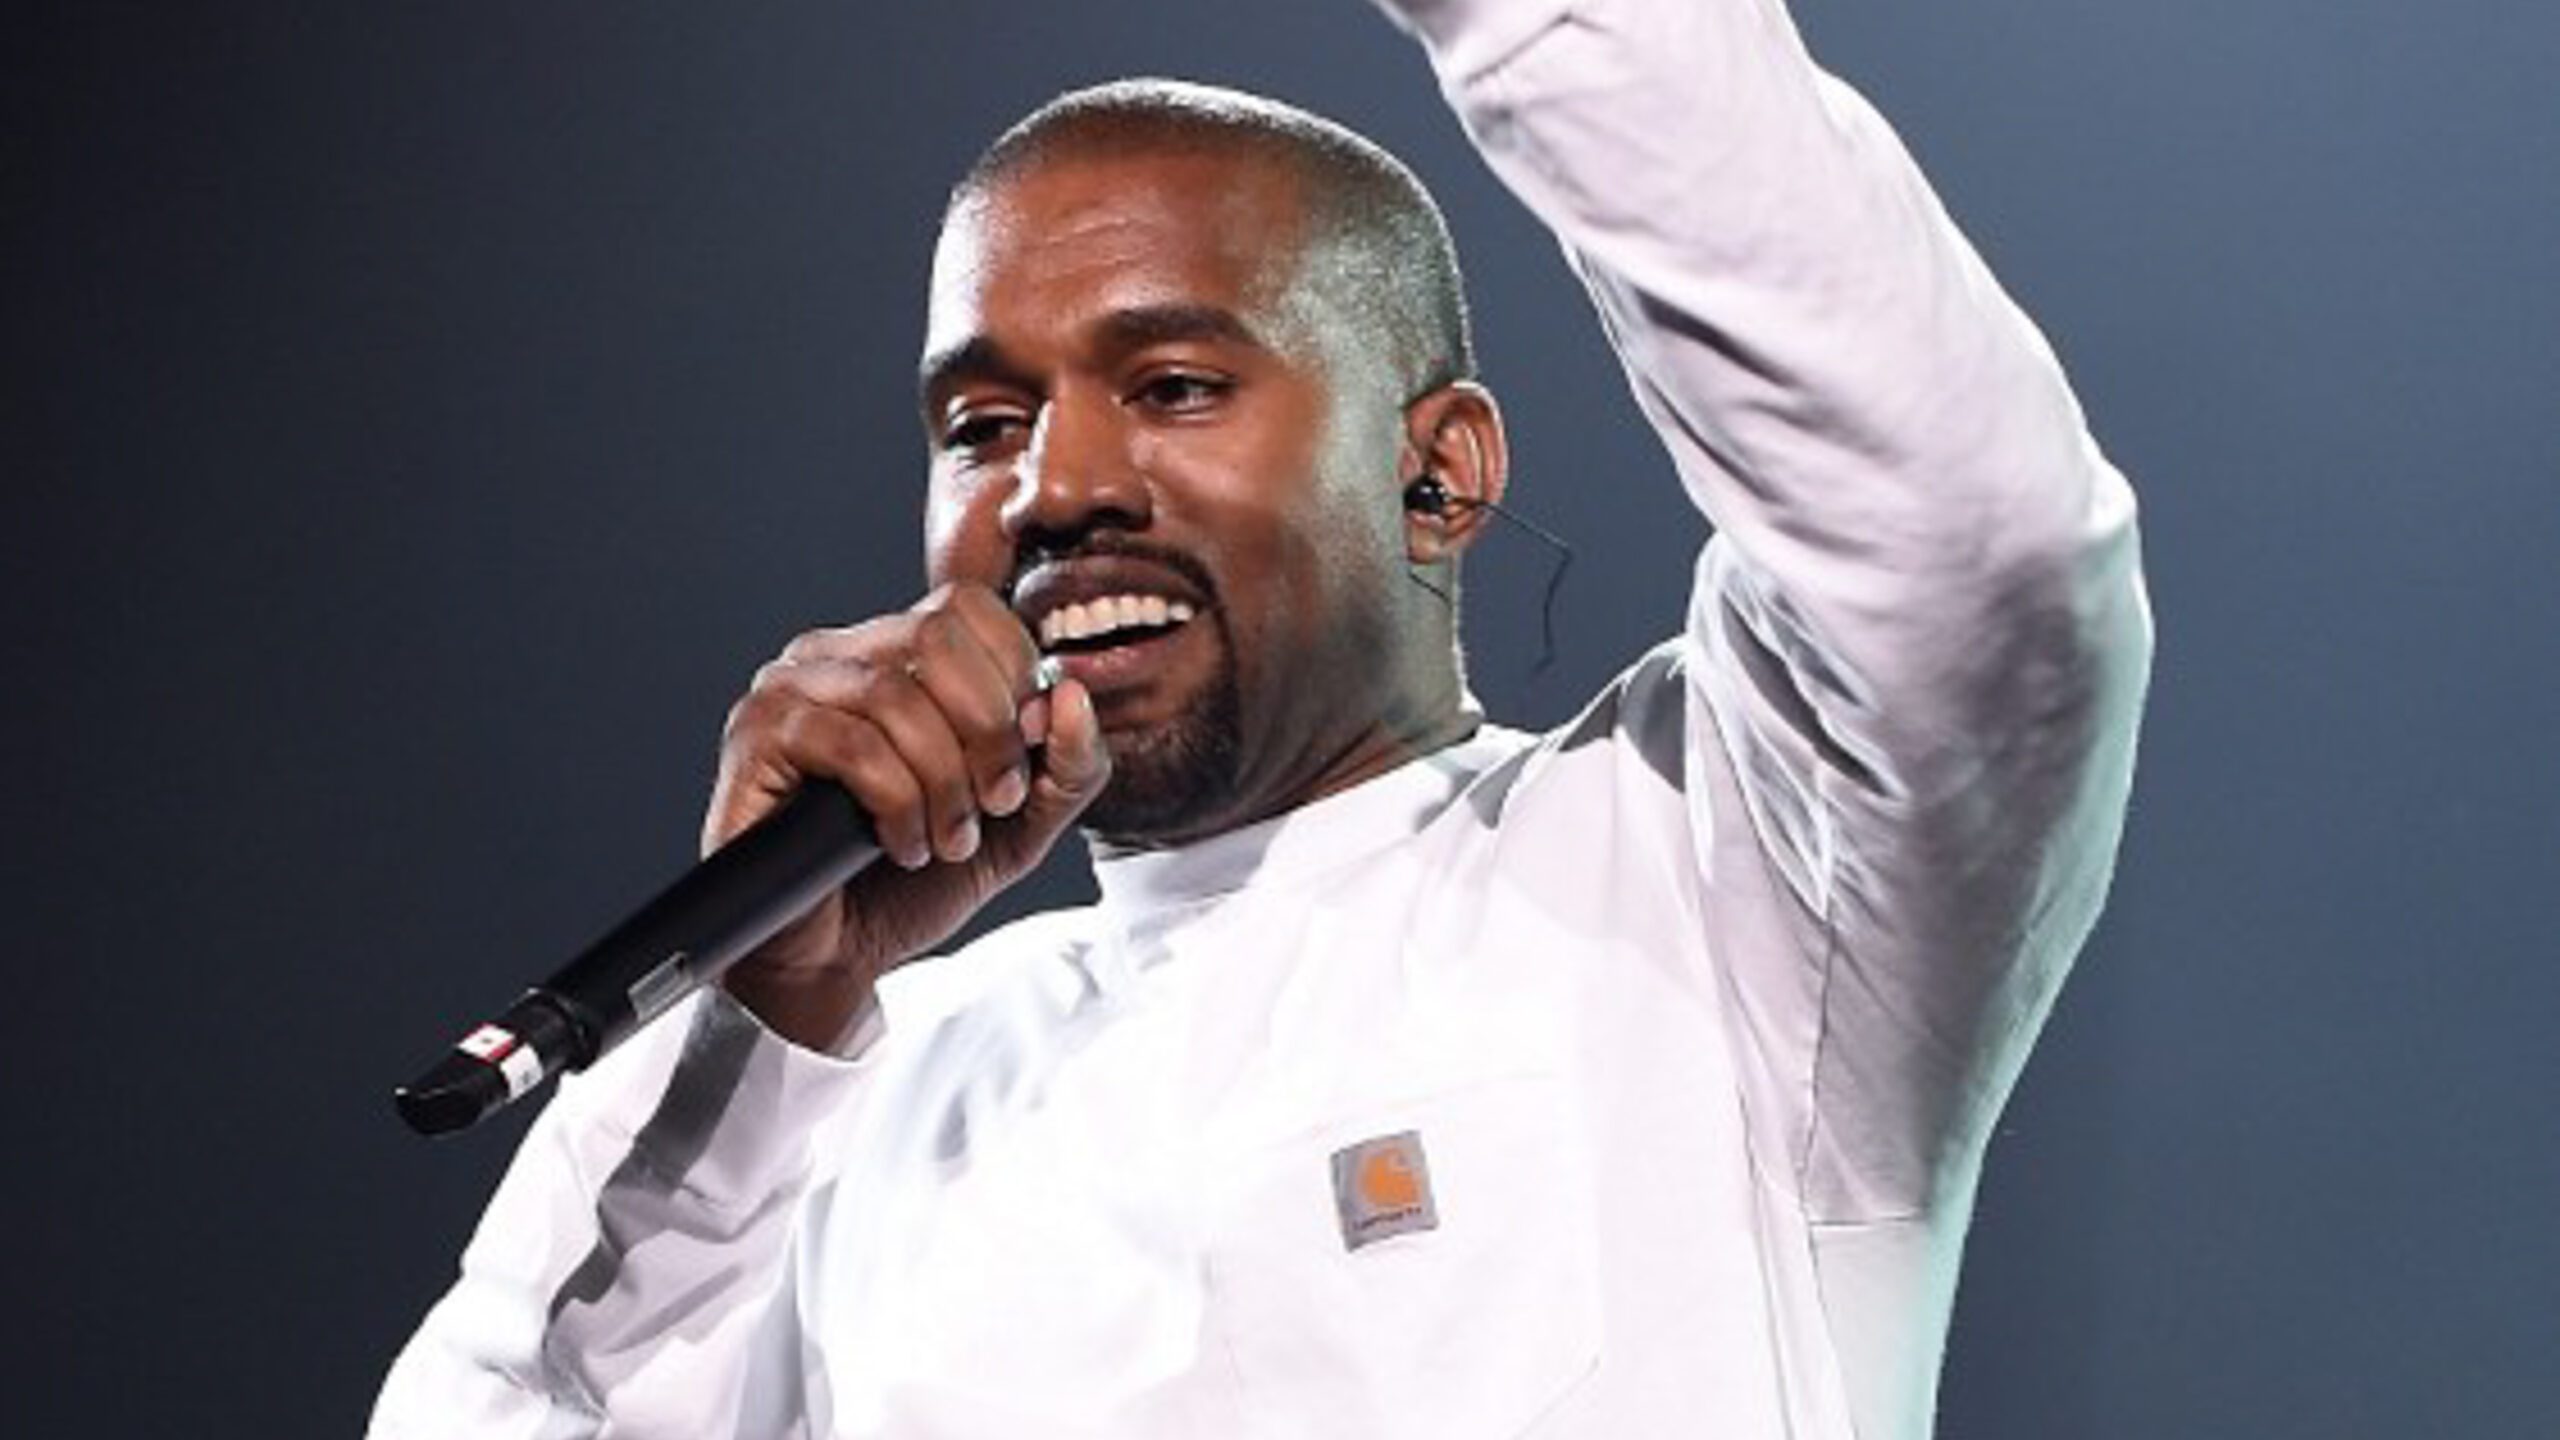 Kanye suffered mental breakdown – reports